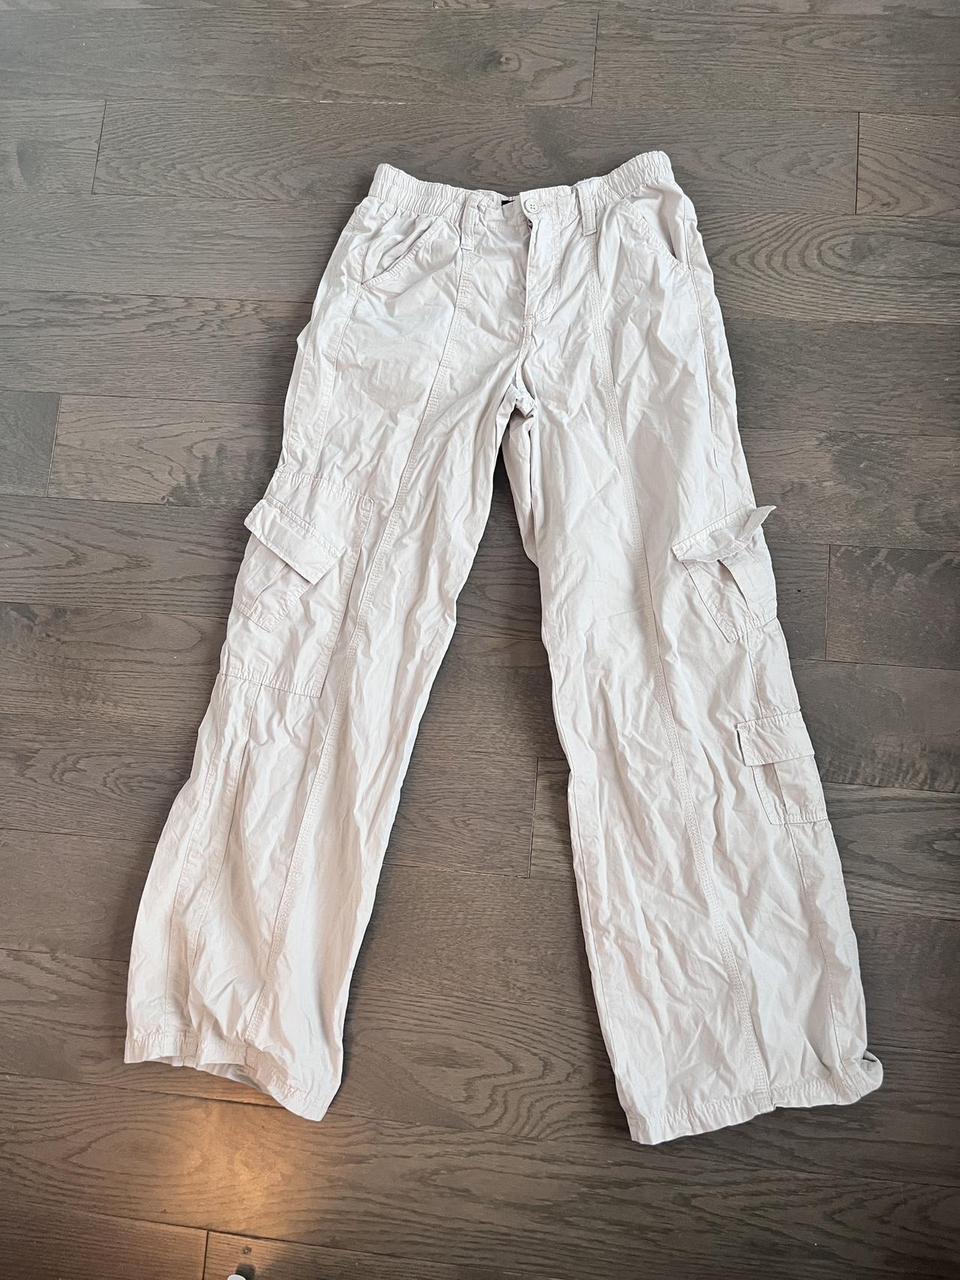 Bdg Y2K low rise cargo pants in white/cream. Such... - Depop